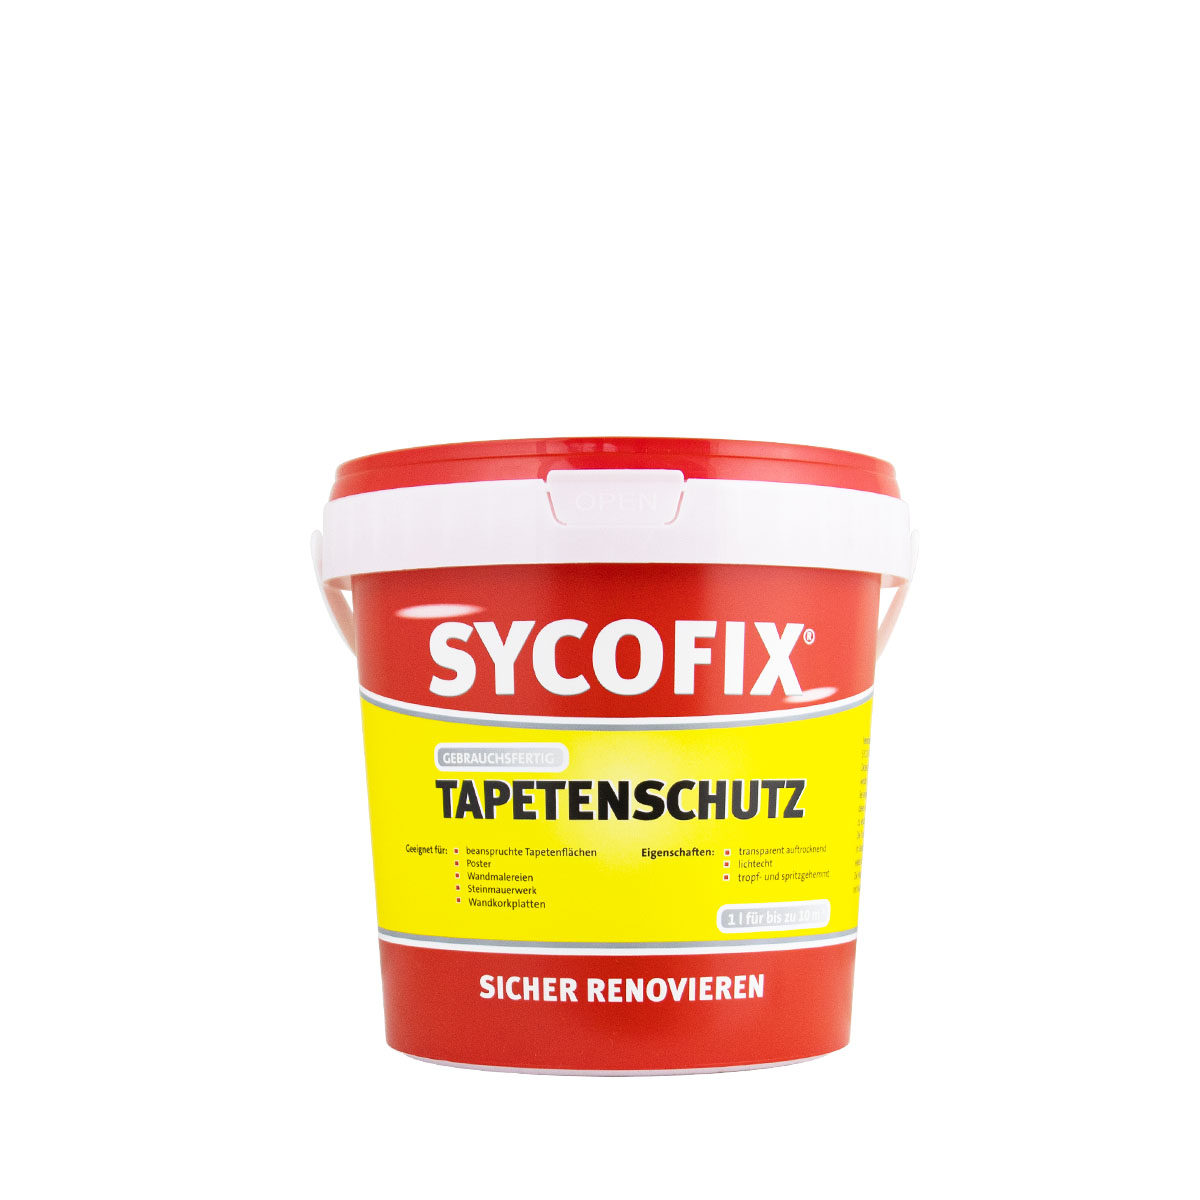 sycofix_tapetenschutz_1kg_gross